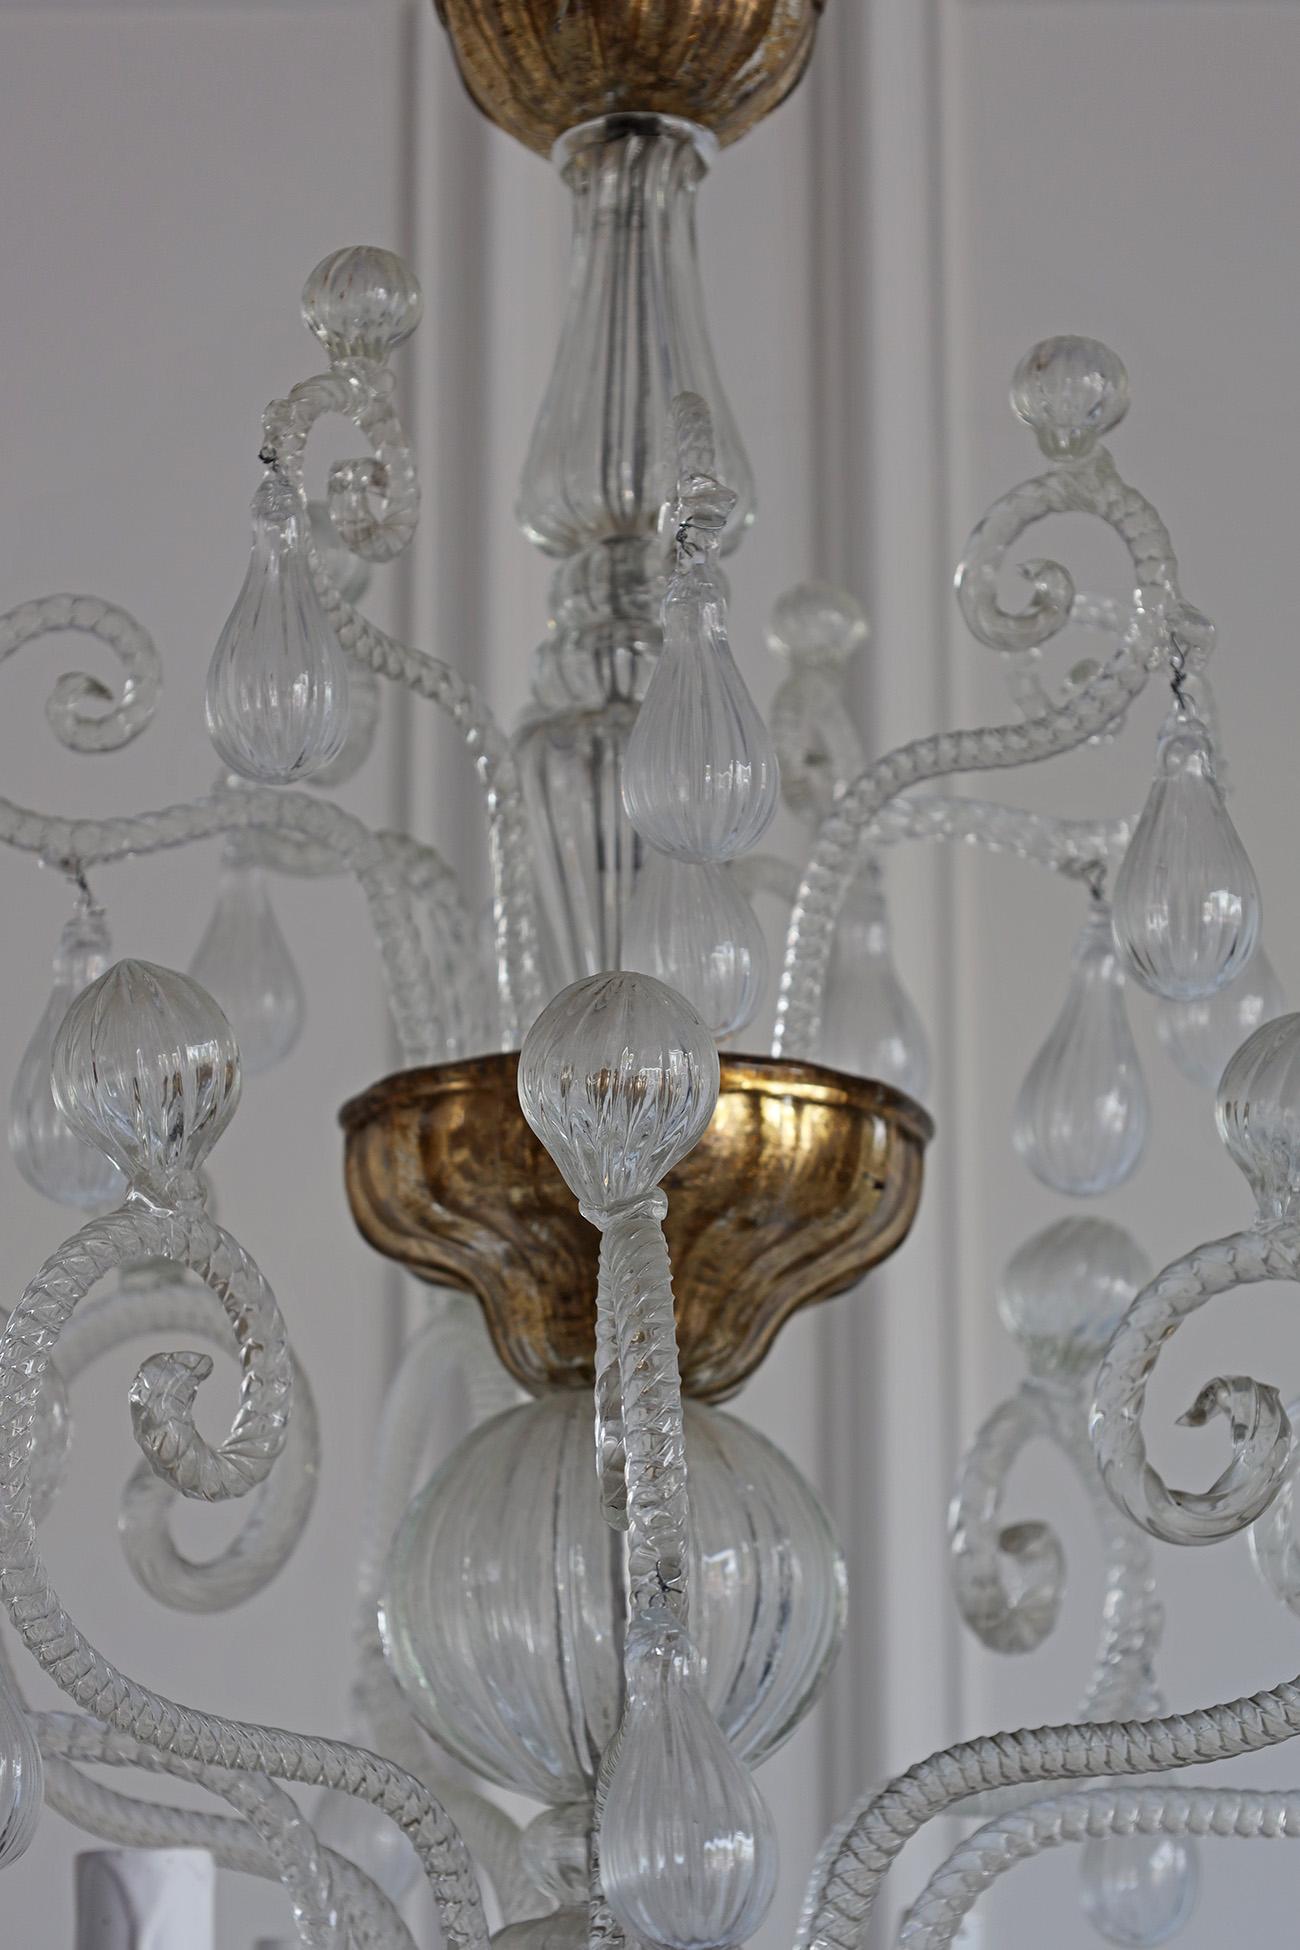 Belgian liègeois crystal chandelier from circa 18th Century.
